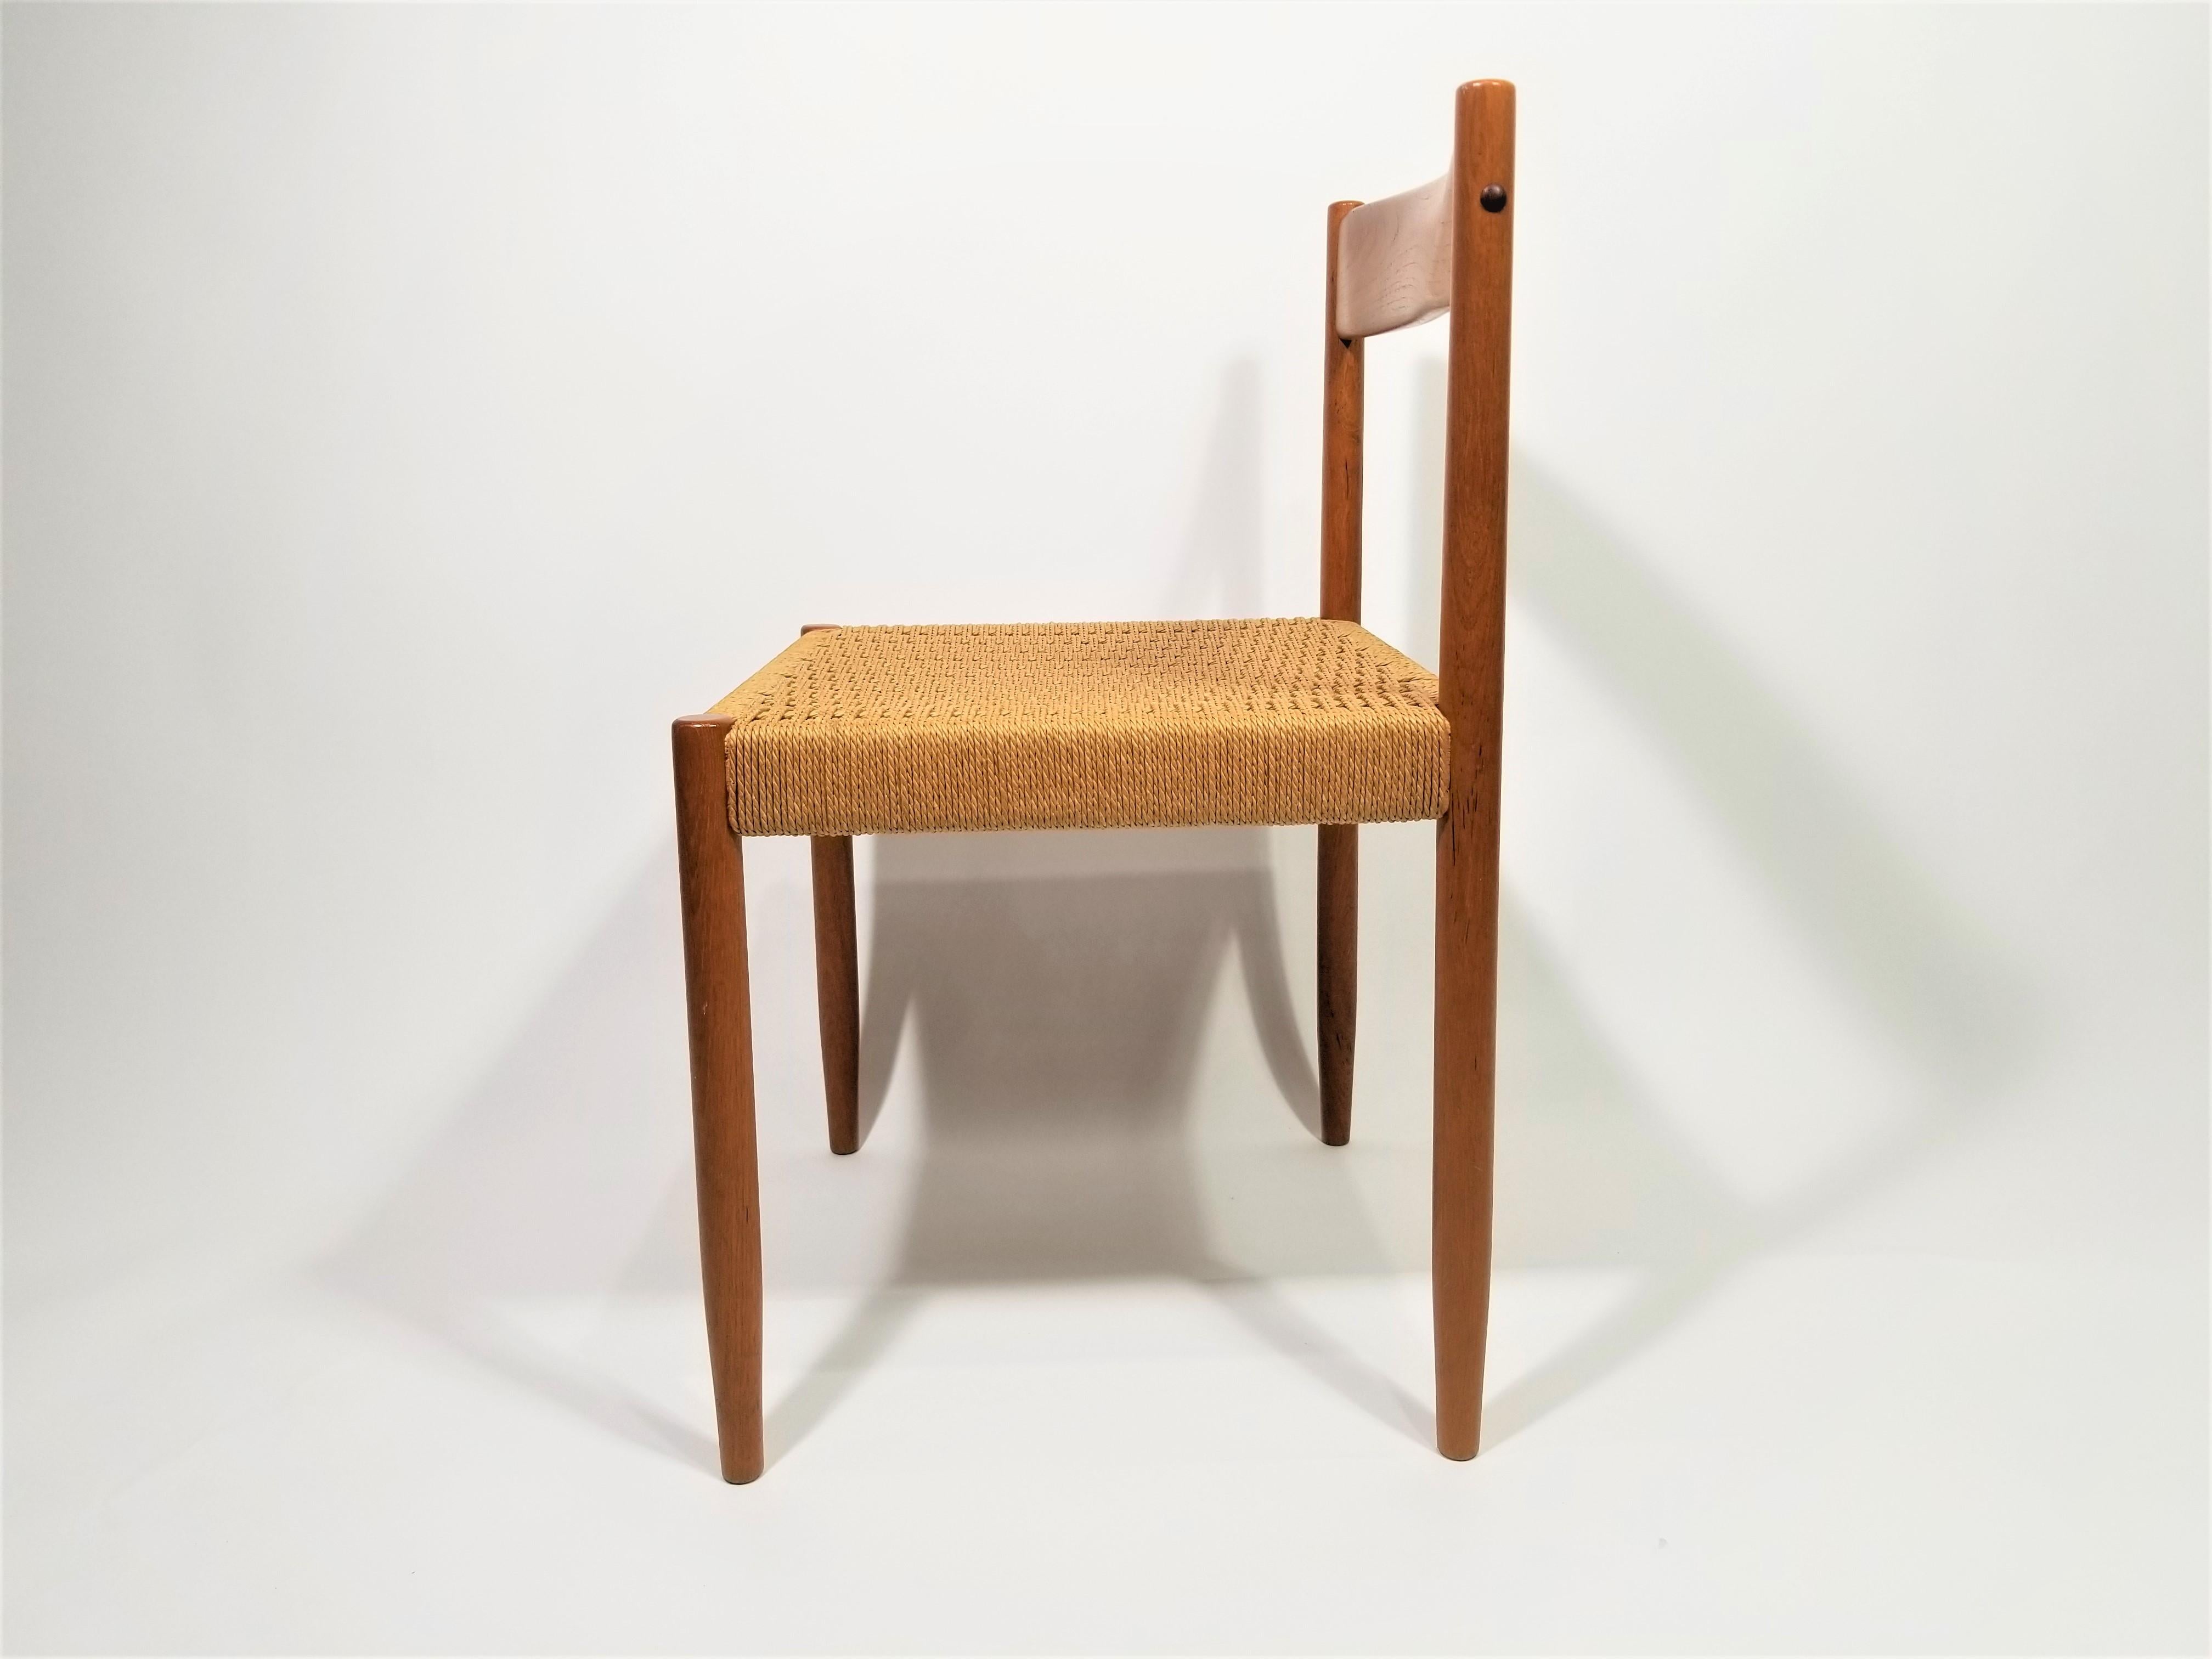 Poul Volther for Frem Rojle Danish Teak Woven Chair Midcentury 1960s  For Sale 5